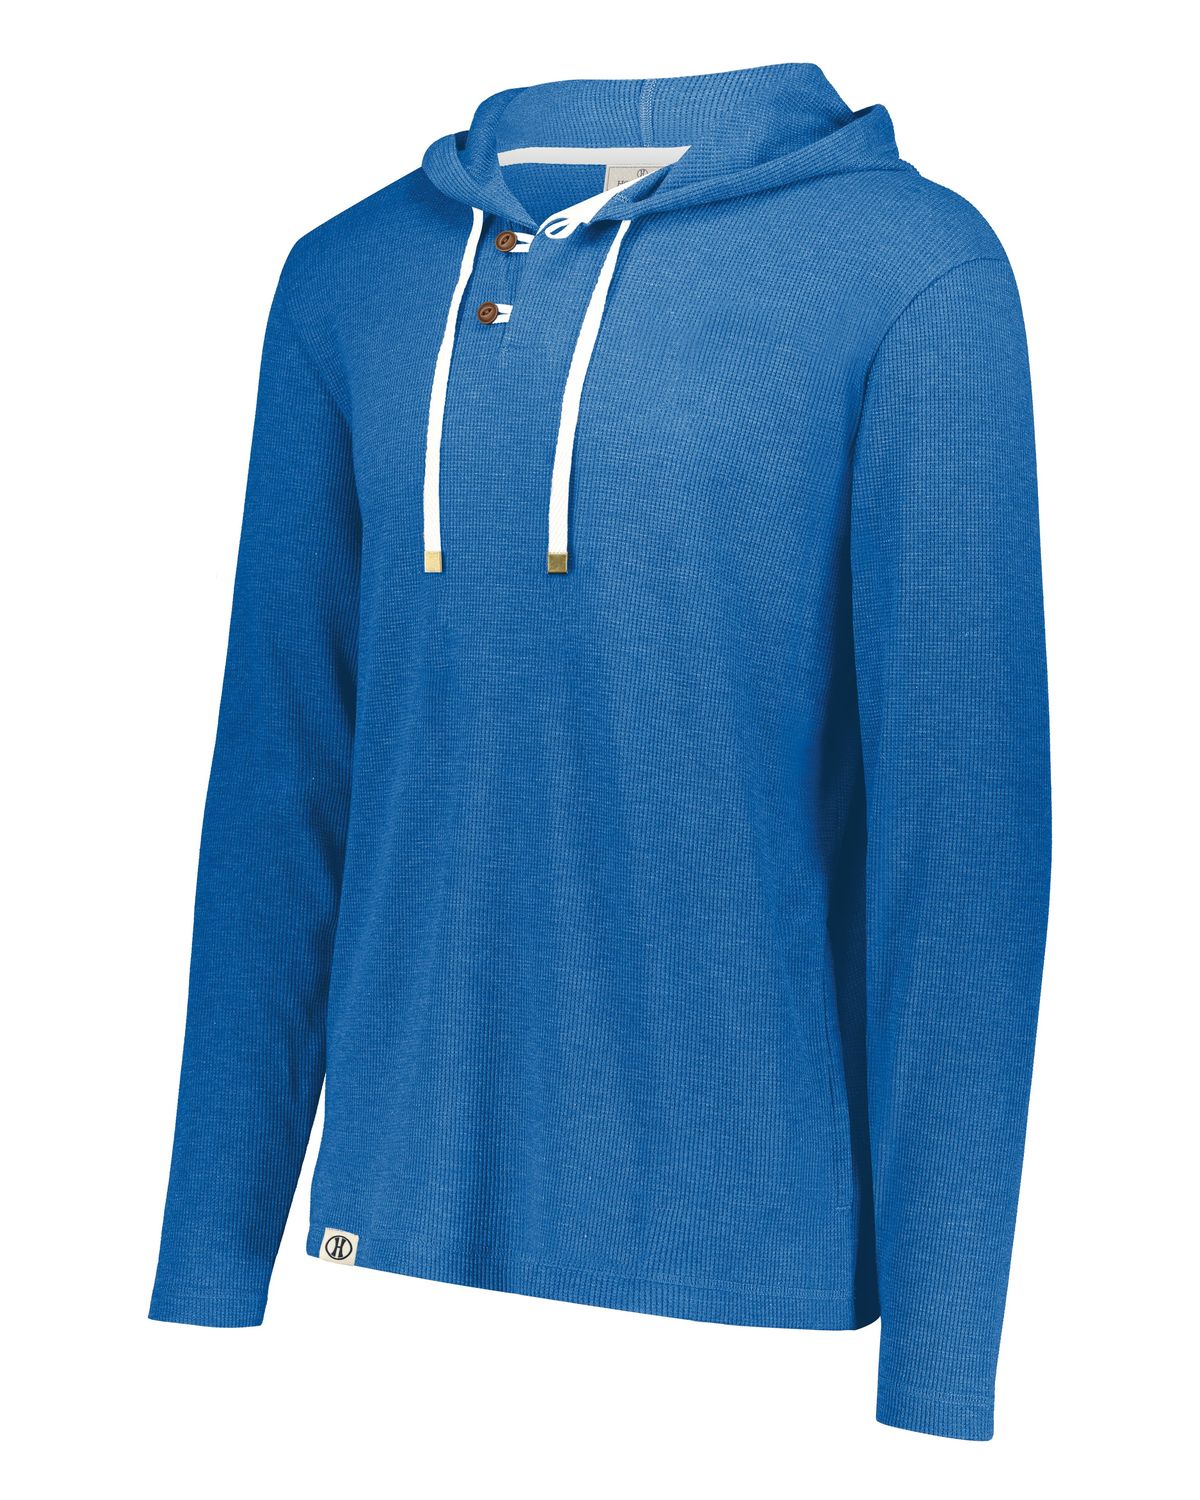 Russell Athletic 1Z4HBM, Dri Power® Quarter-Zip Cadet Collar Sweatshirt